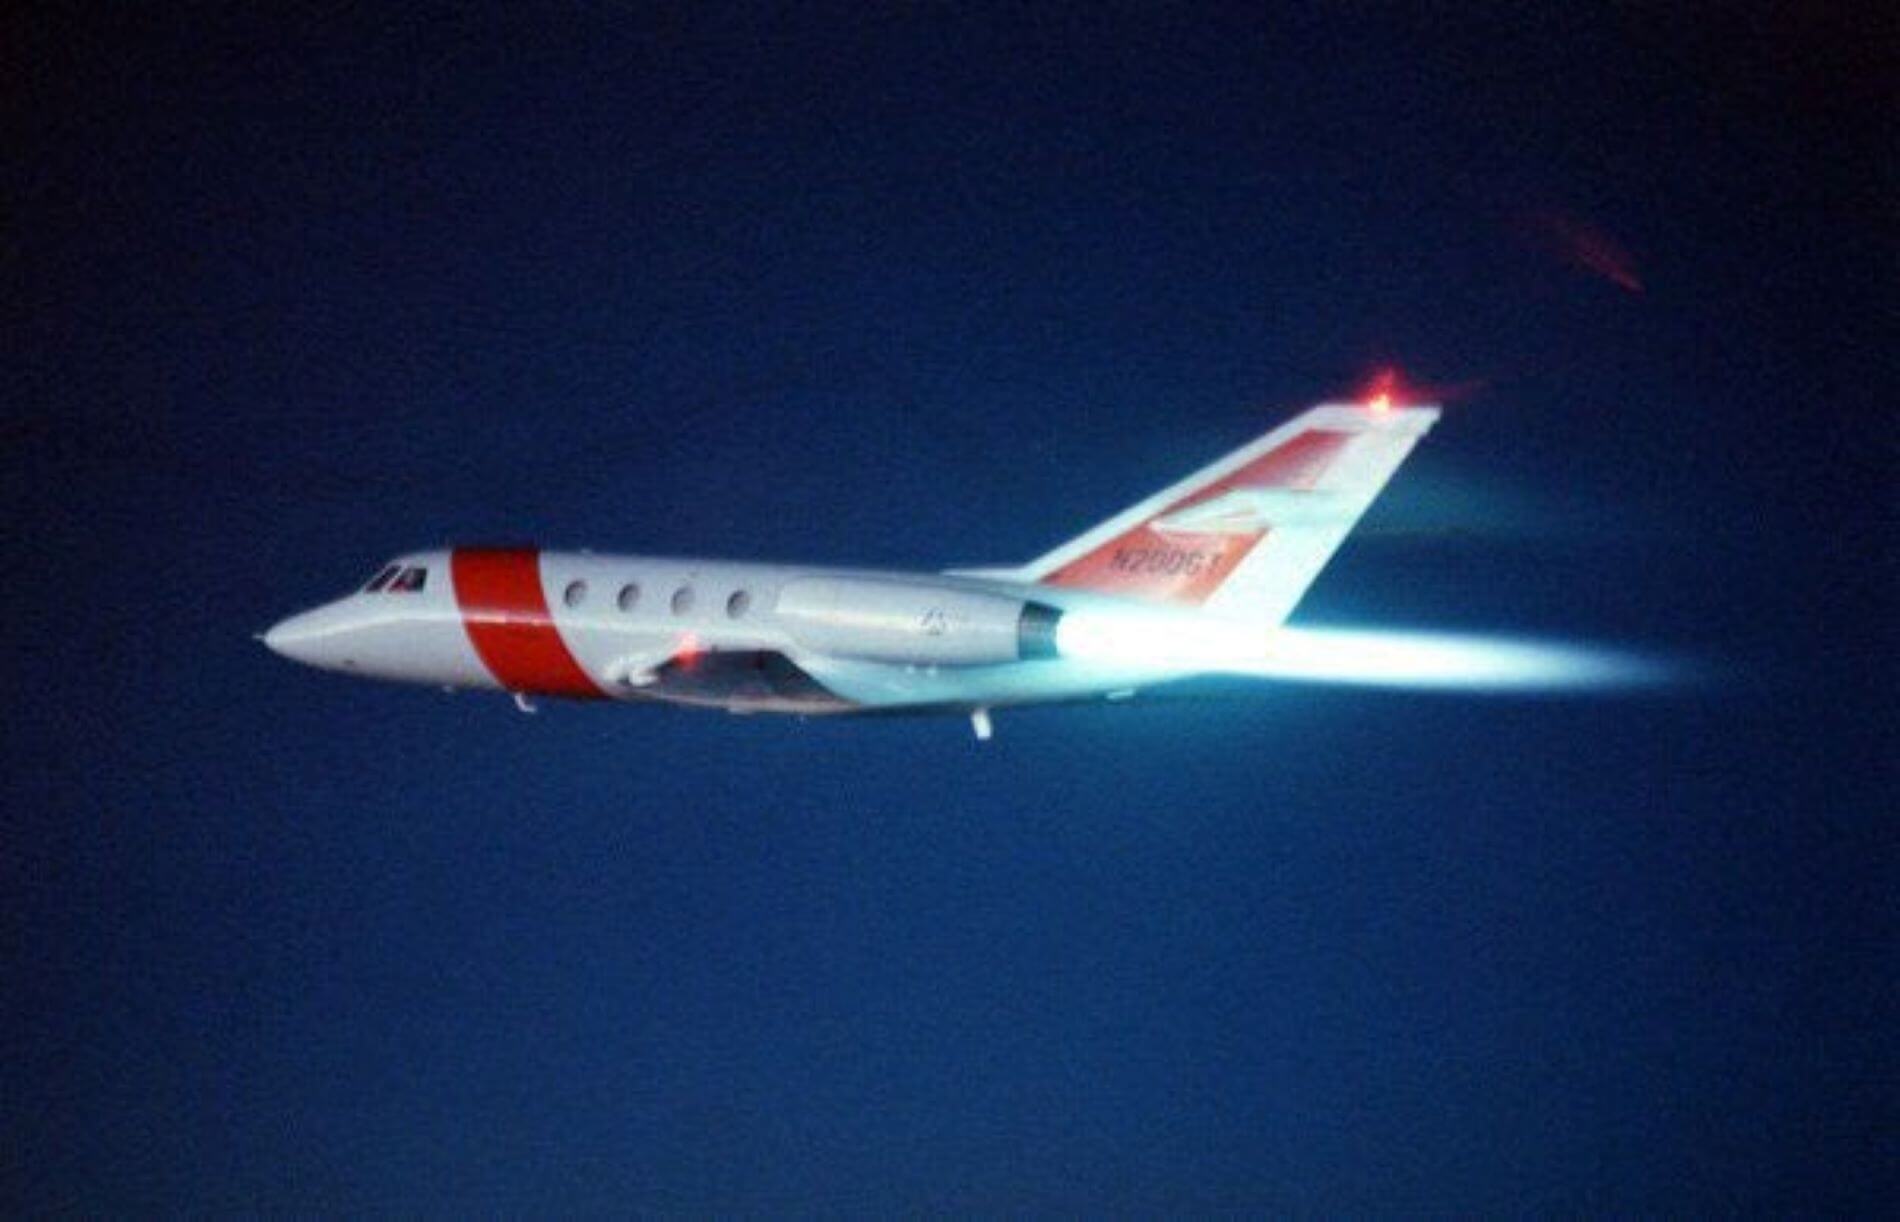 Dassault Falcon 20 afterburner AeroTime News